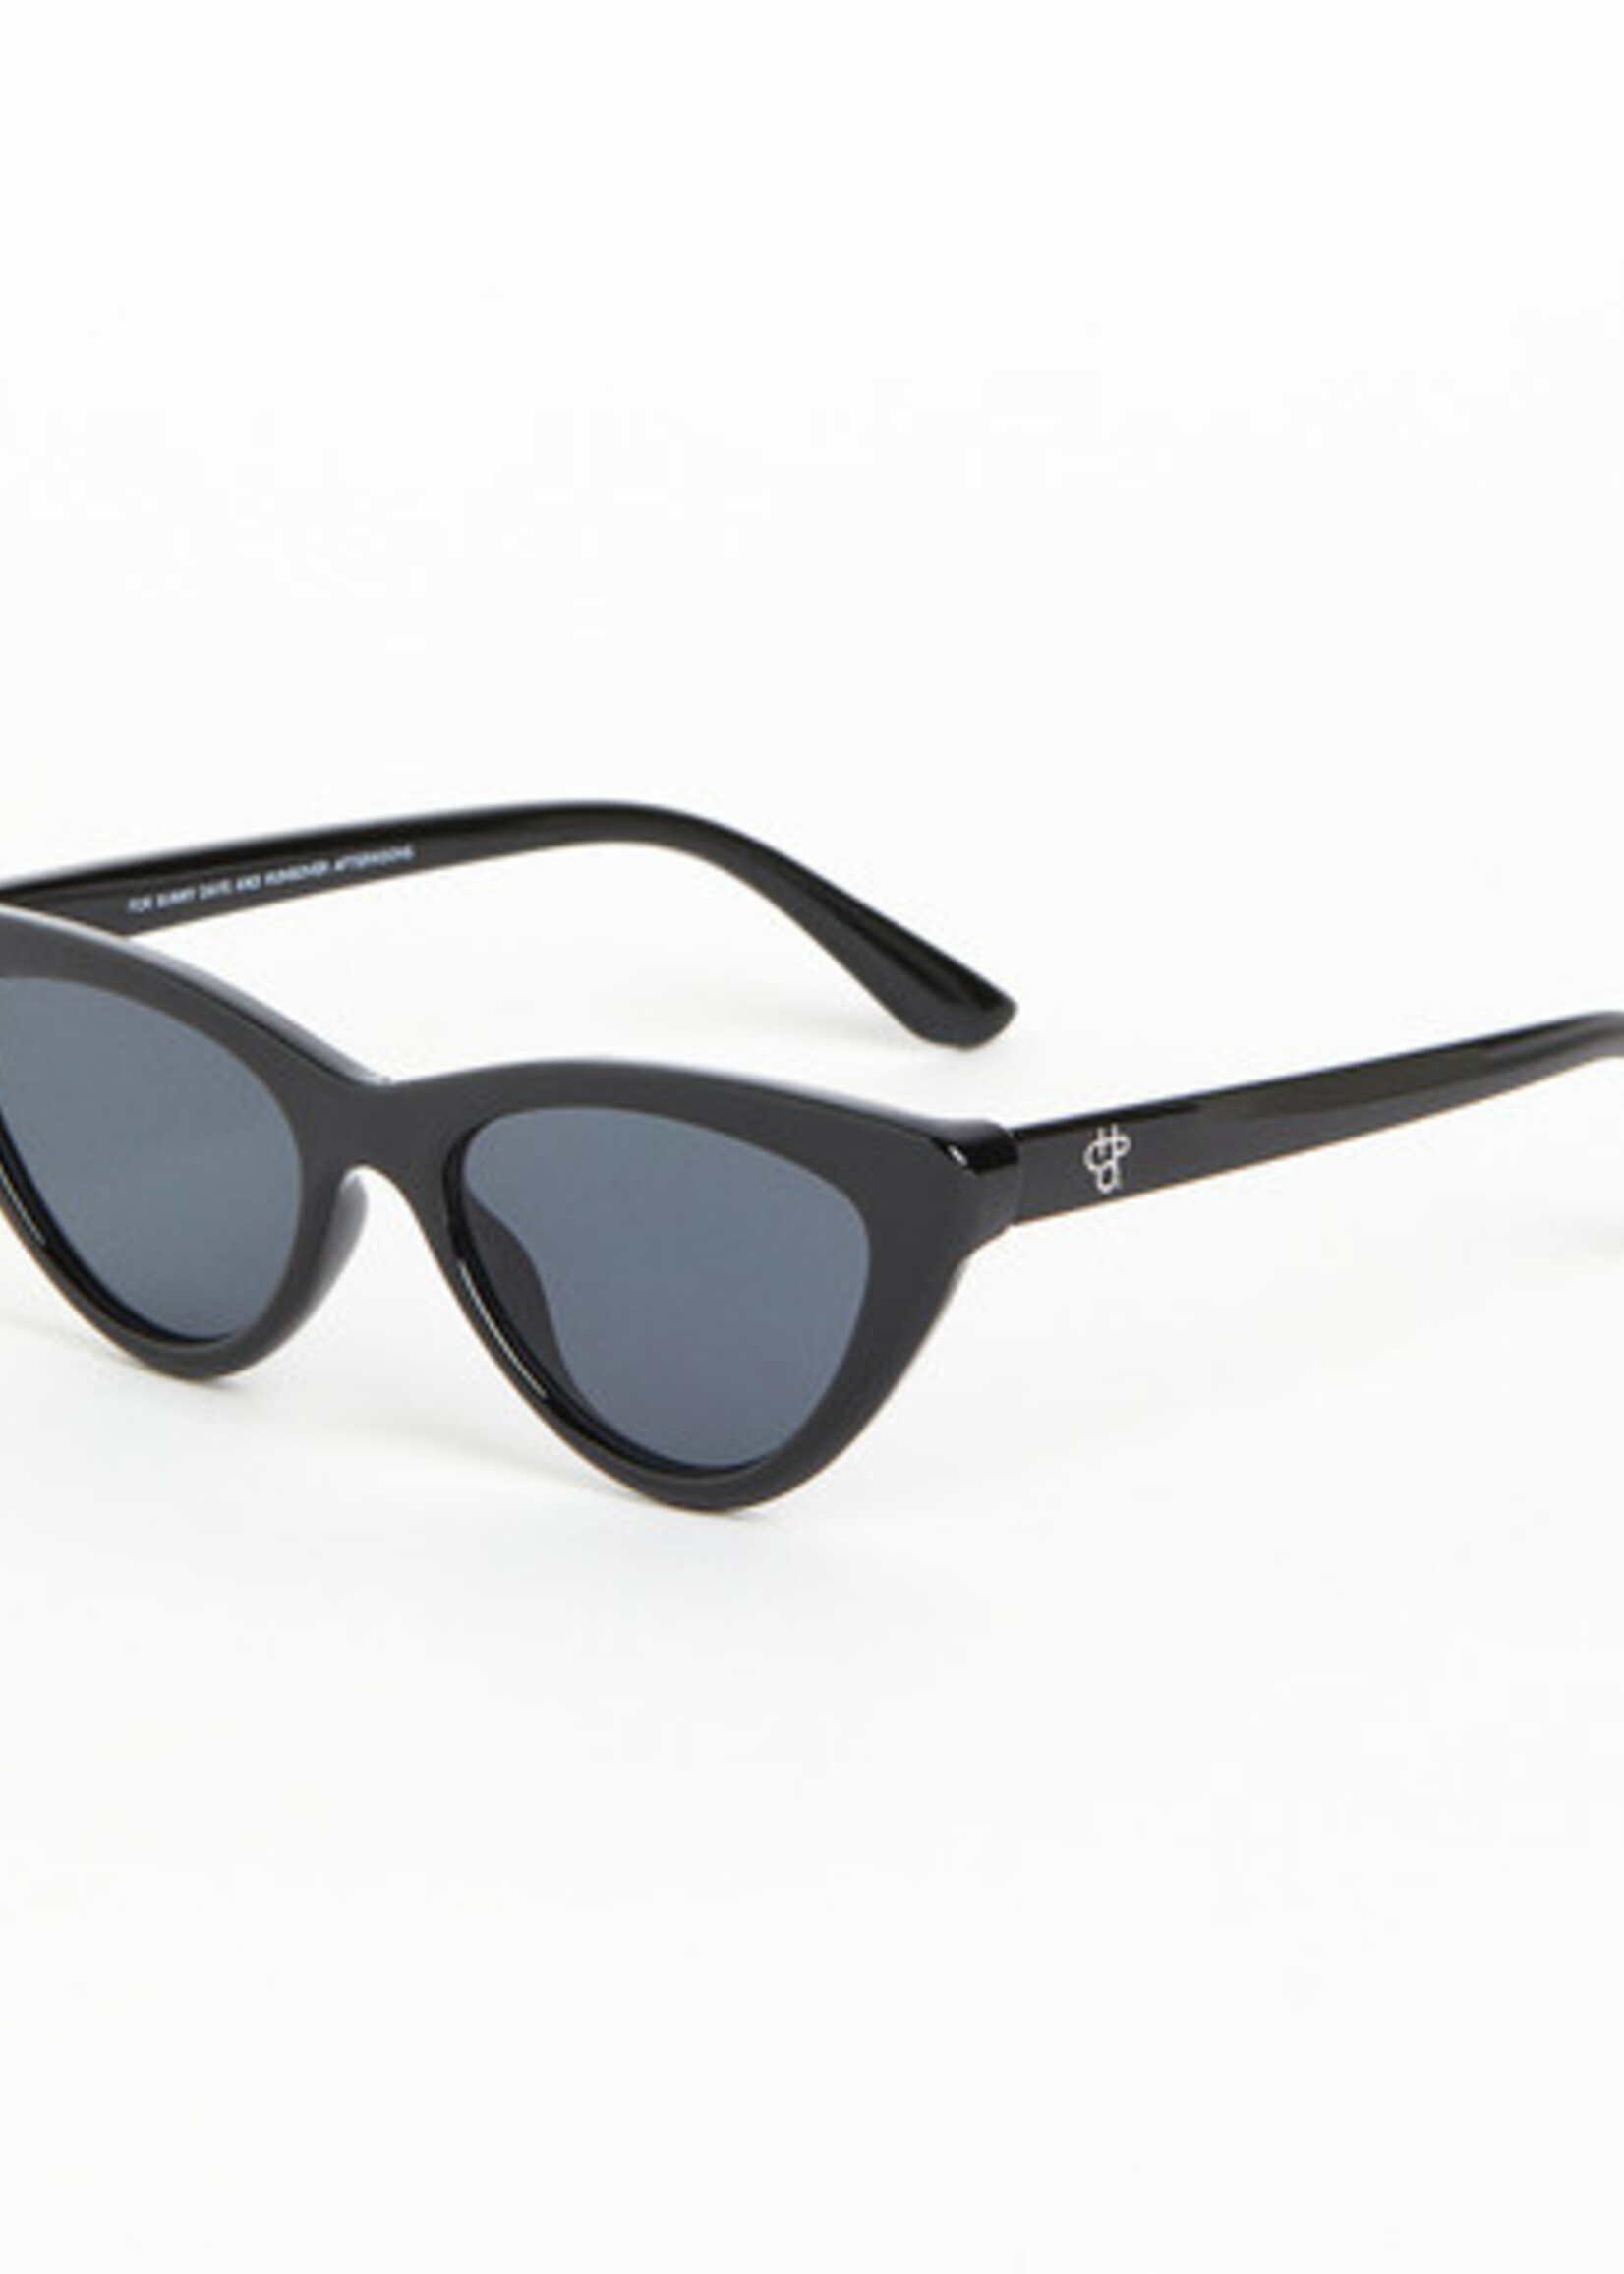 CHPO Brand Sunglasses Amy Black On Black